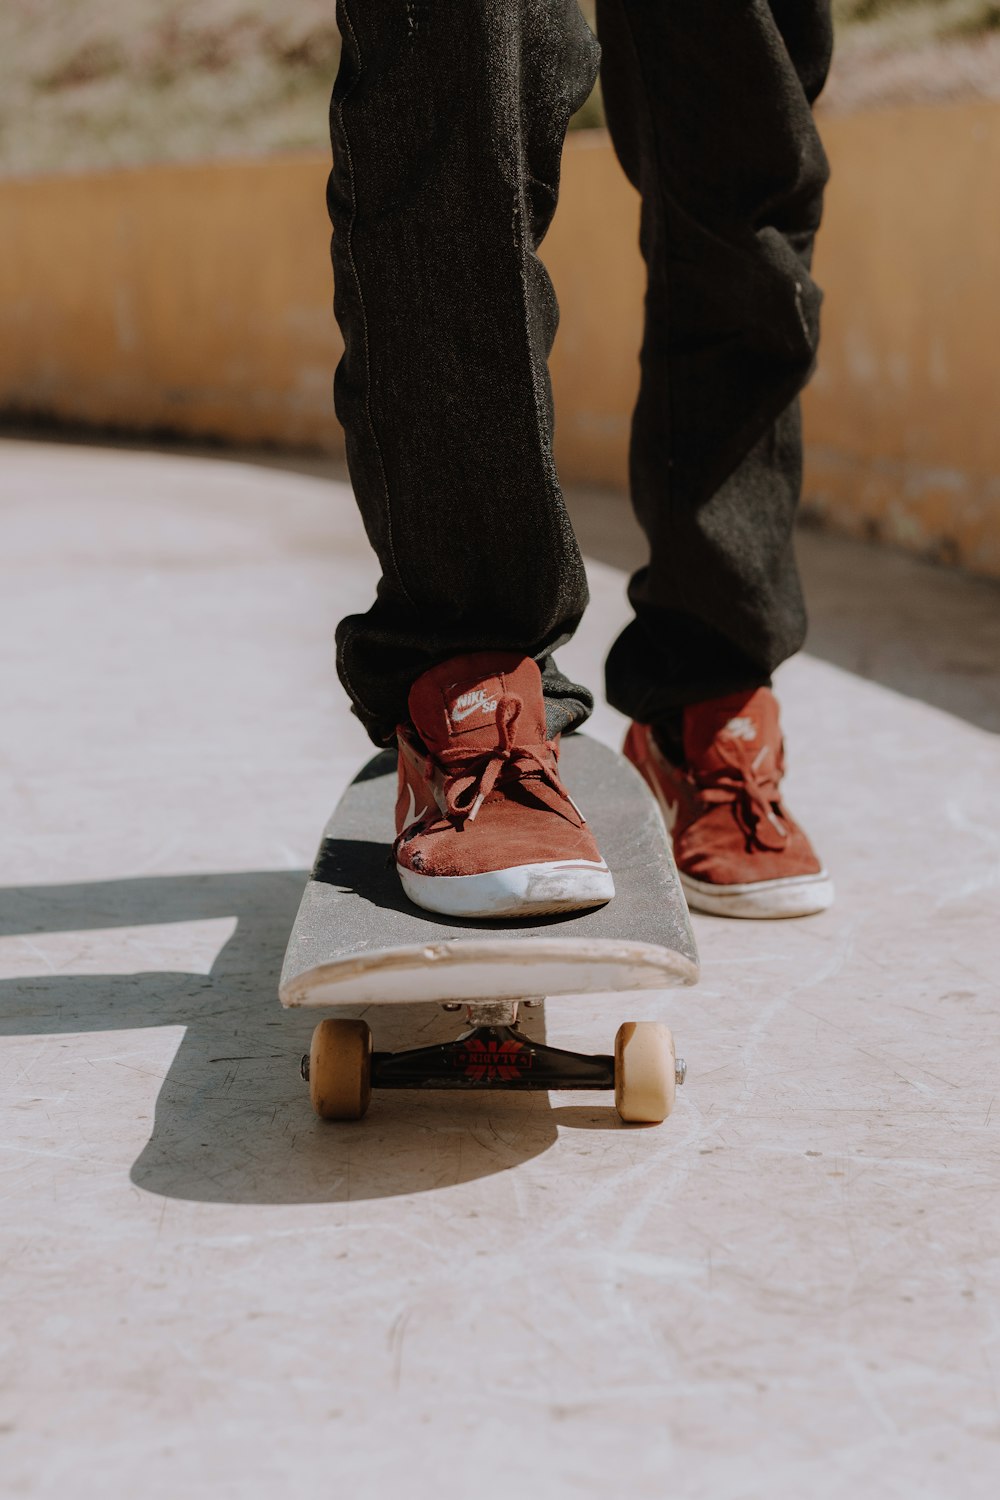 man riding on skateboard